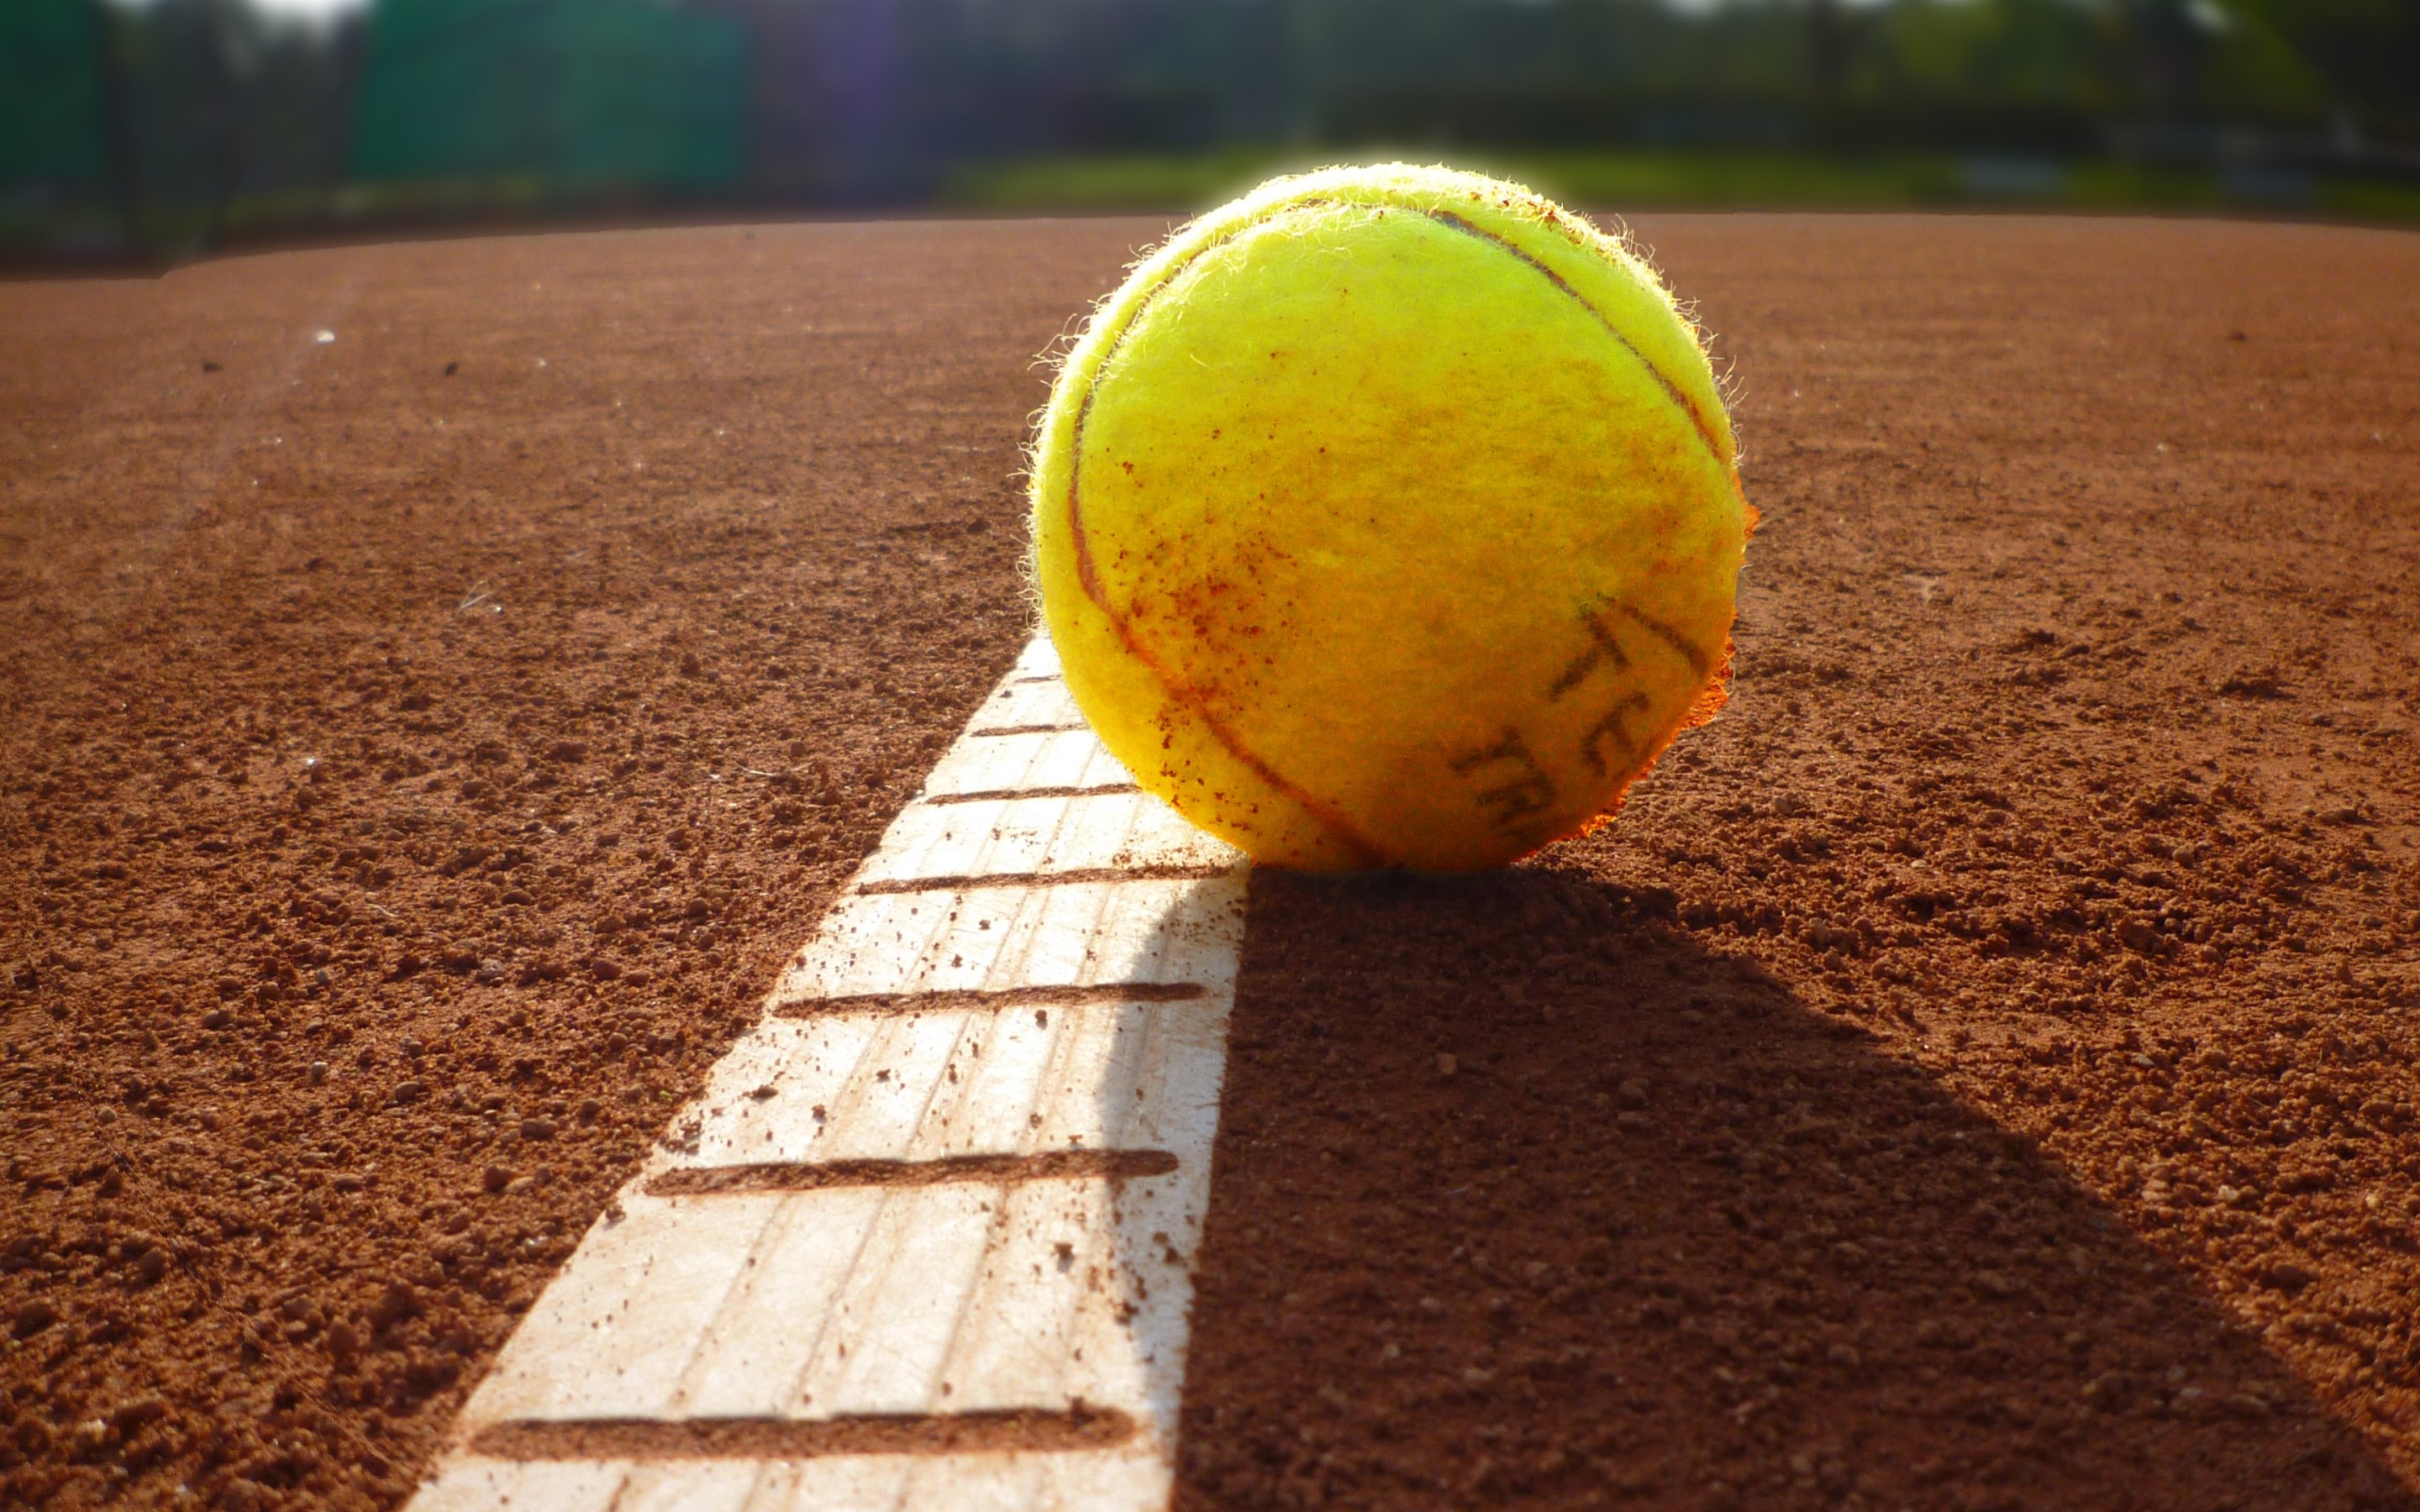 fond d'écran de tennis,balle de tennis,tennis,court de tennis,sport de raquette,jaune